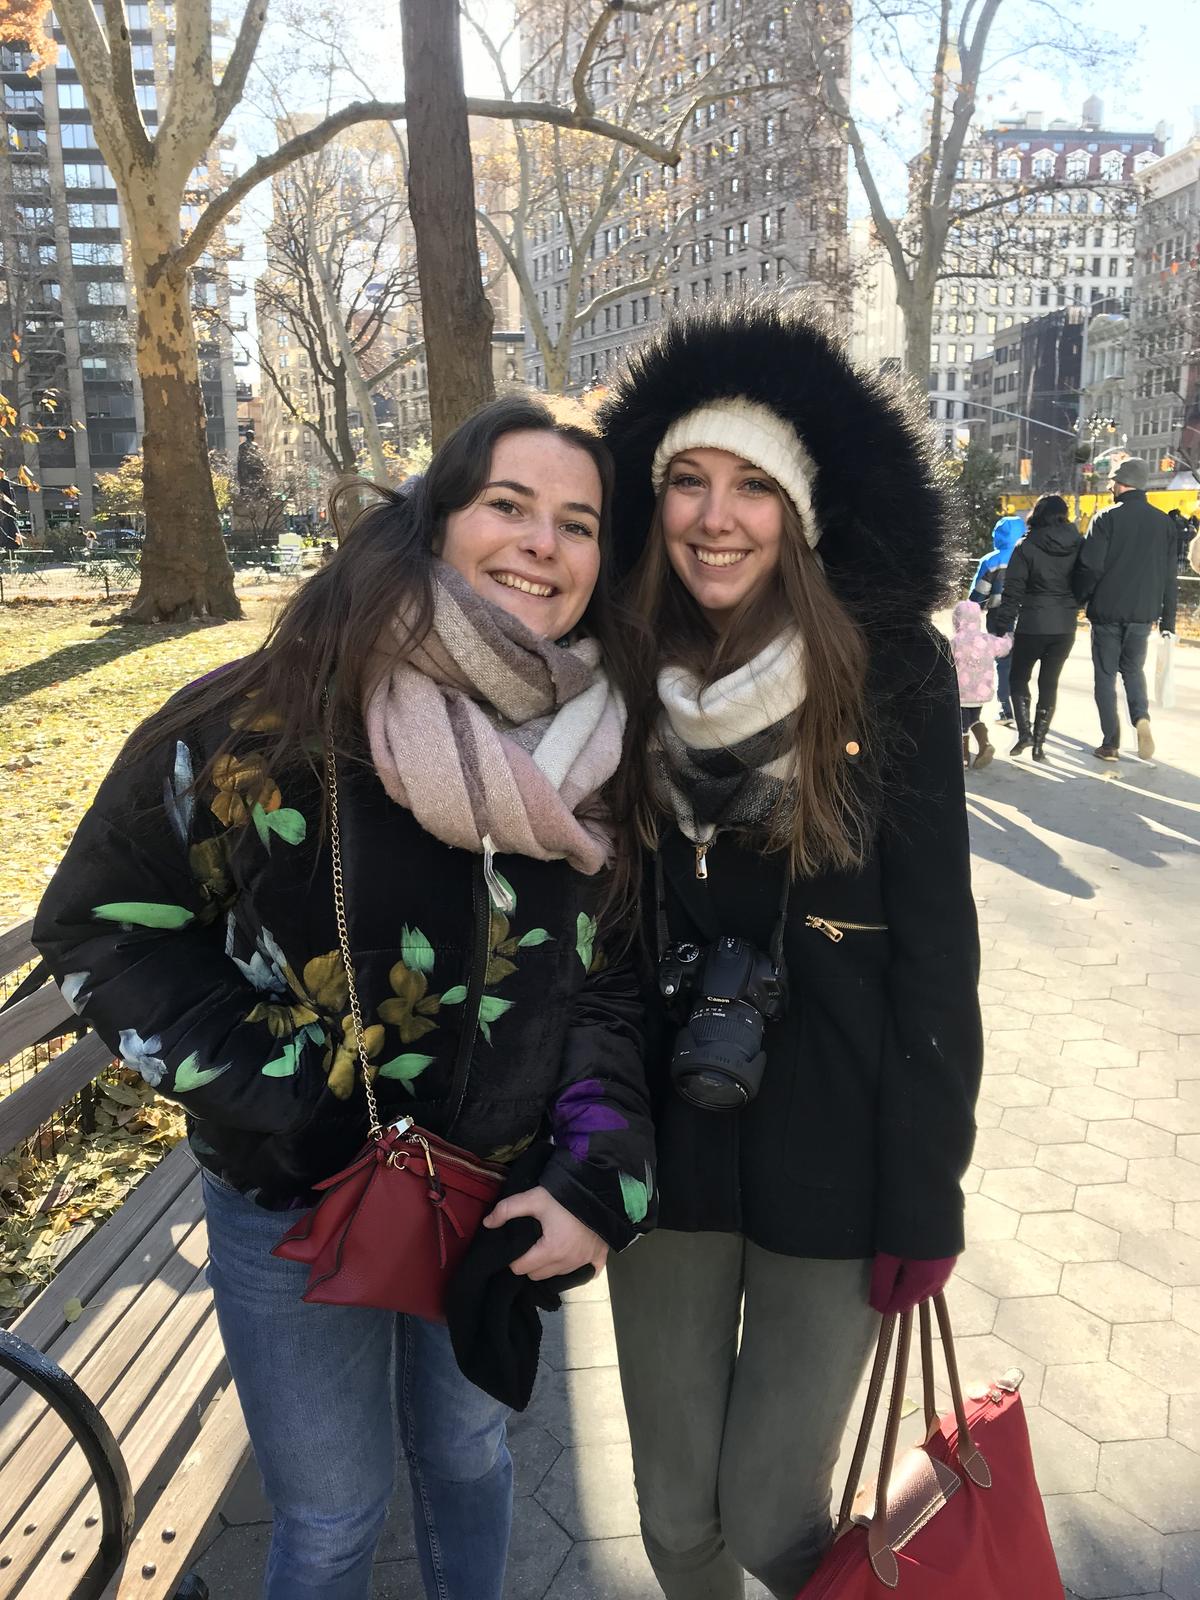 Chloe Derrin (L) and Violette Macherel in Maddison Square Park, New York, on Nov. 23, 2018. (Stuart Liess/The Epoch Times)